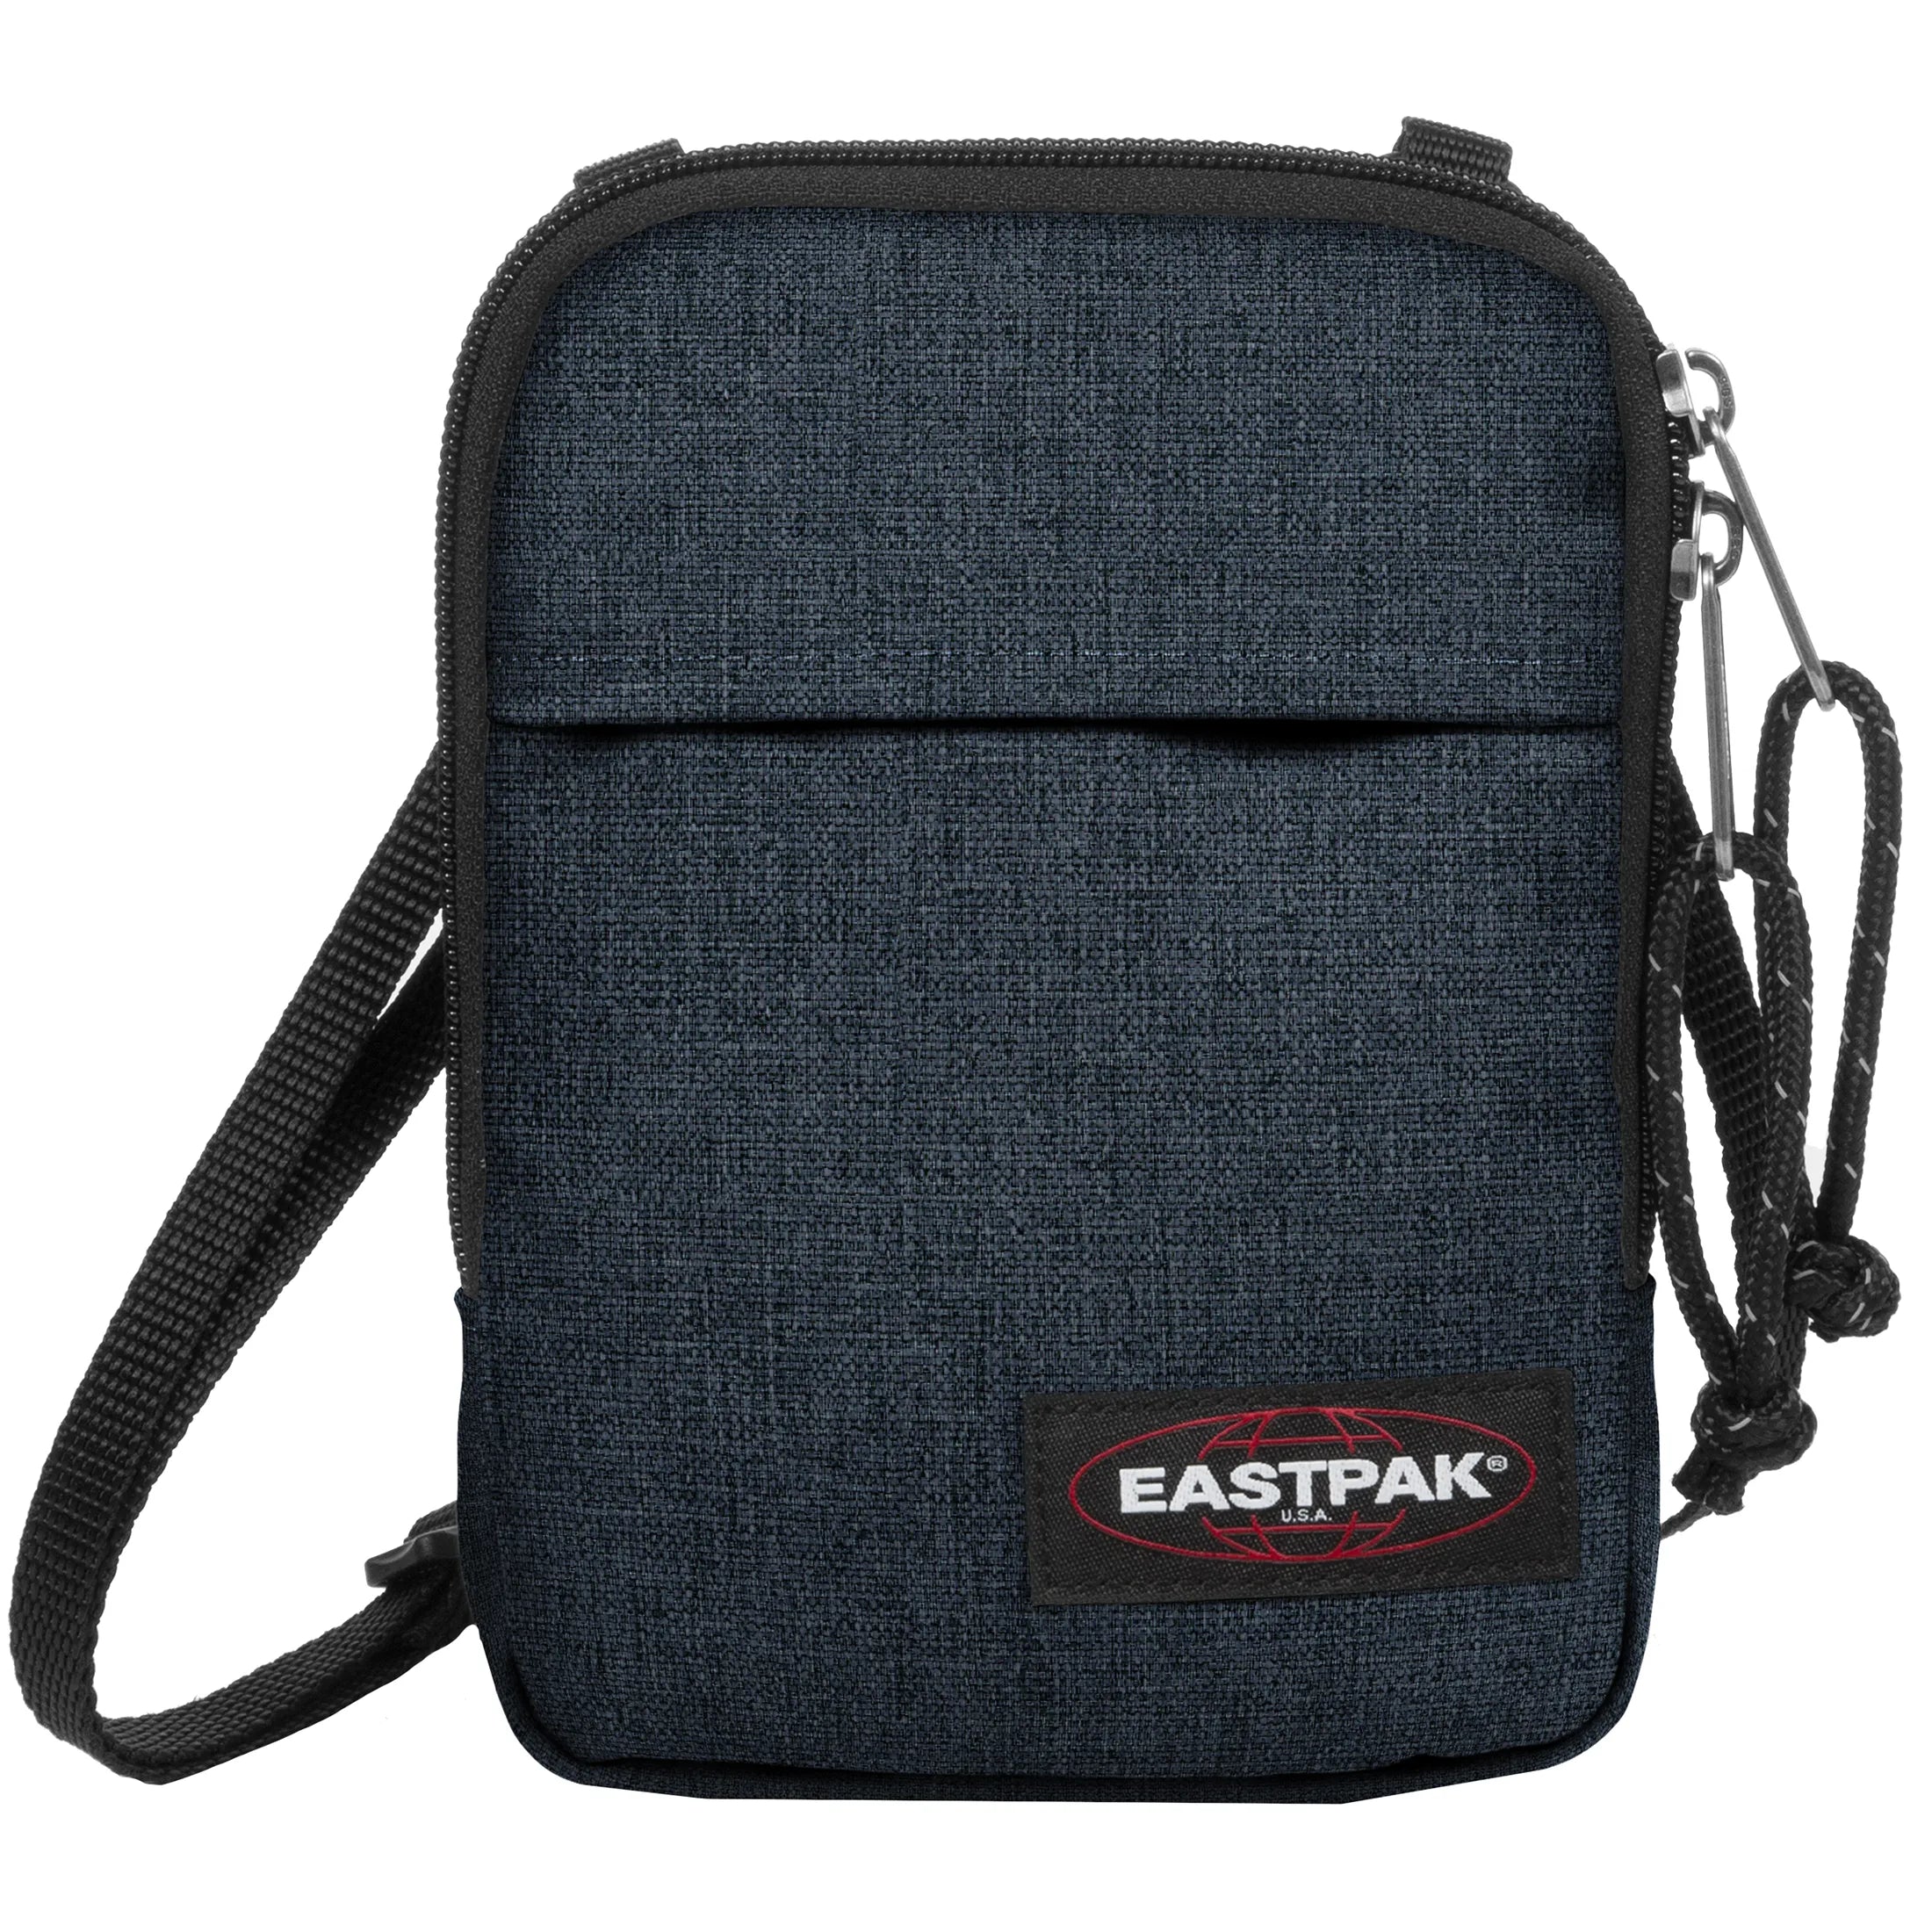 Eastpak Authentic Buddy Jugendtasche 18 cm - triple denim